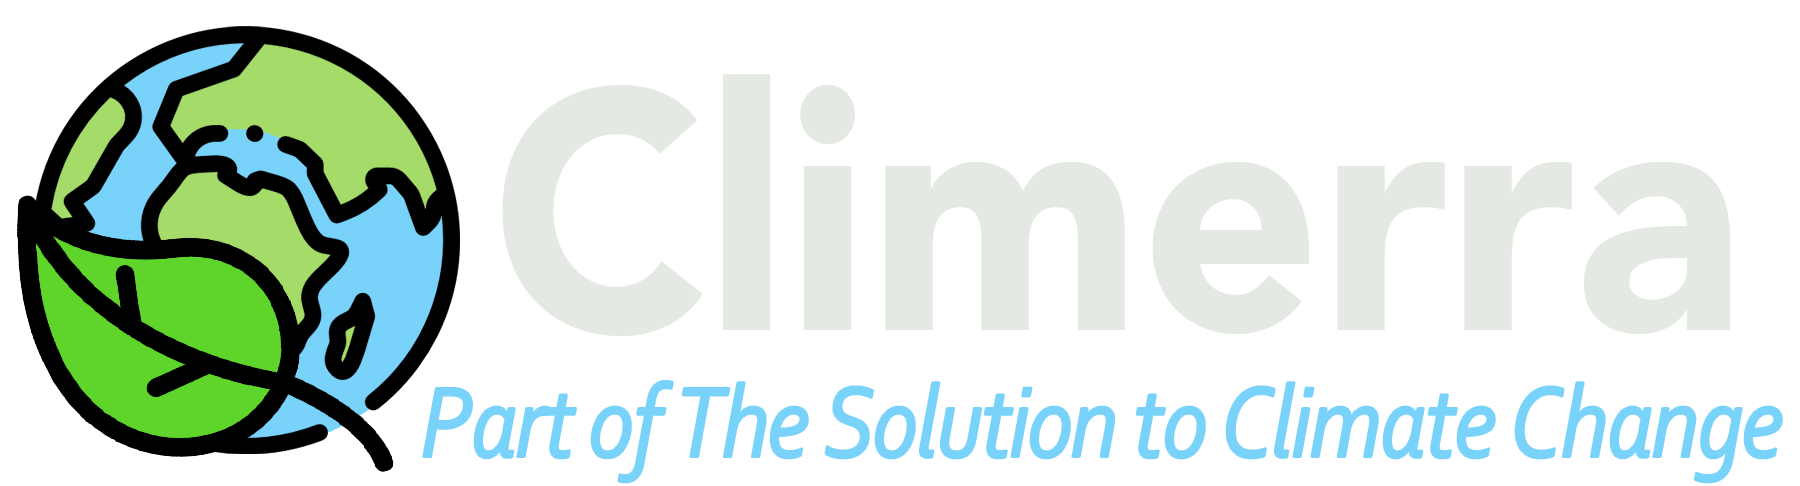 Climerra new logo 5